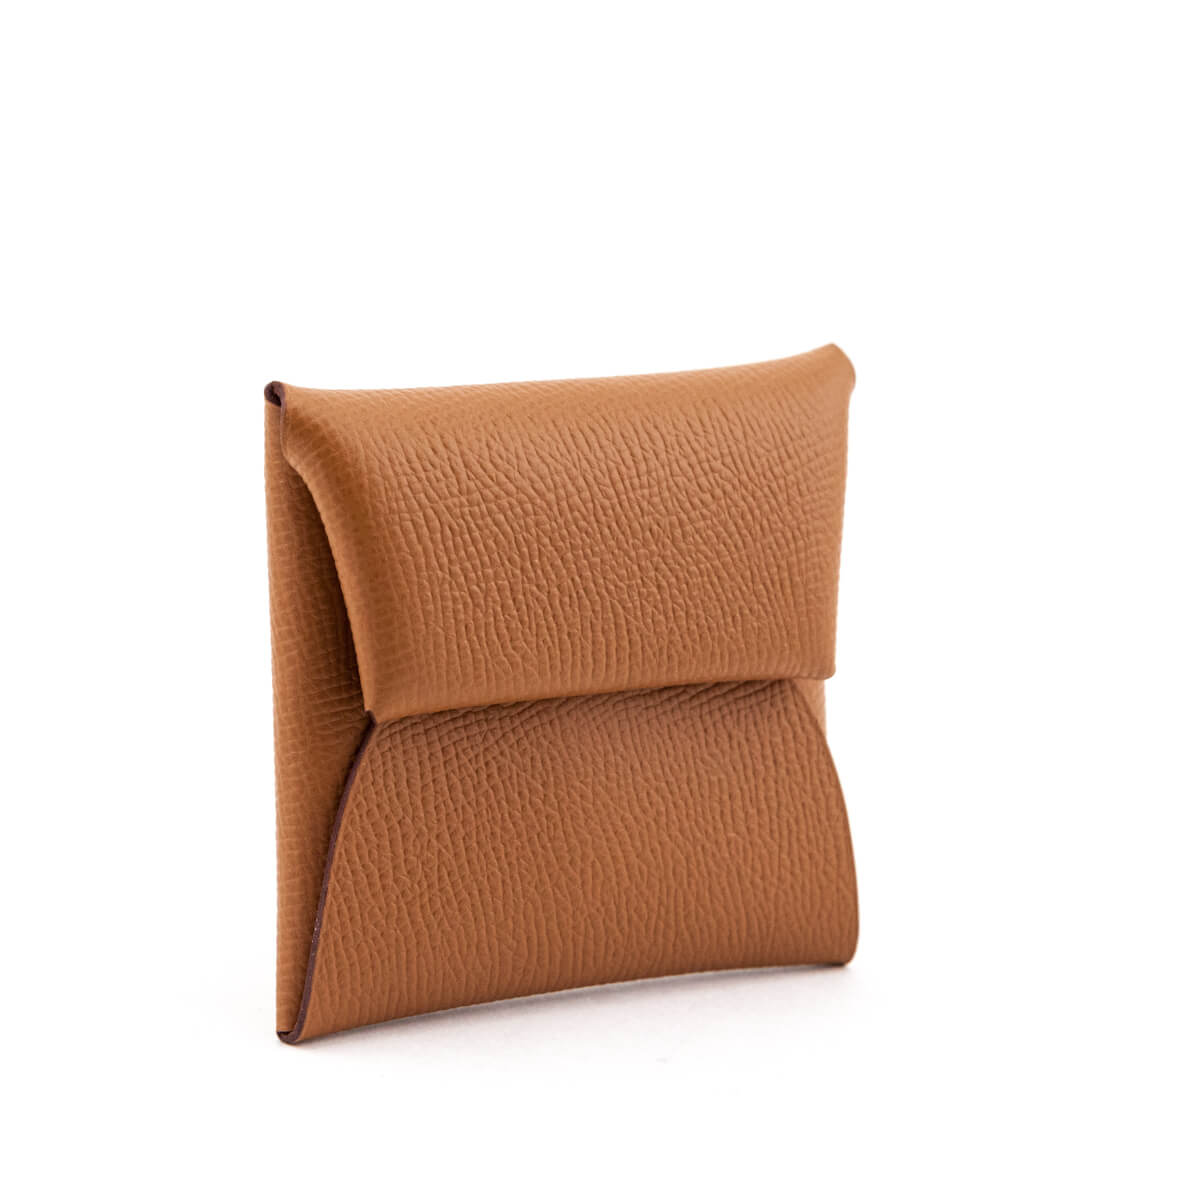 Hermes Gold Epsom Bastia Change Purse - Love that Bag etc - Preowned Authentic Designer Handbags & Preloved Fashions